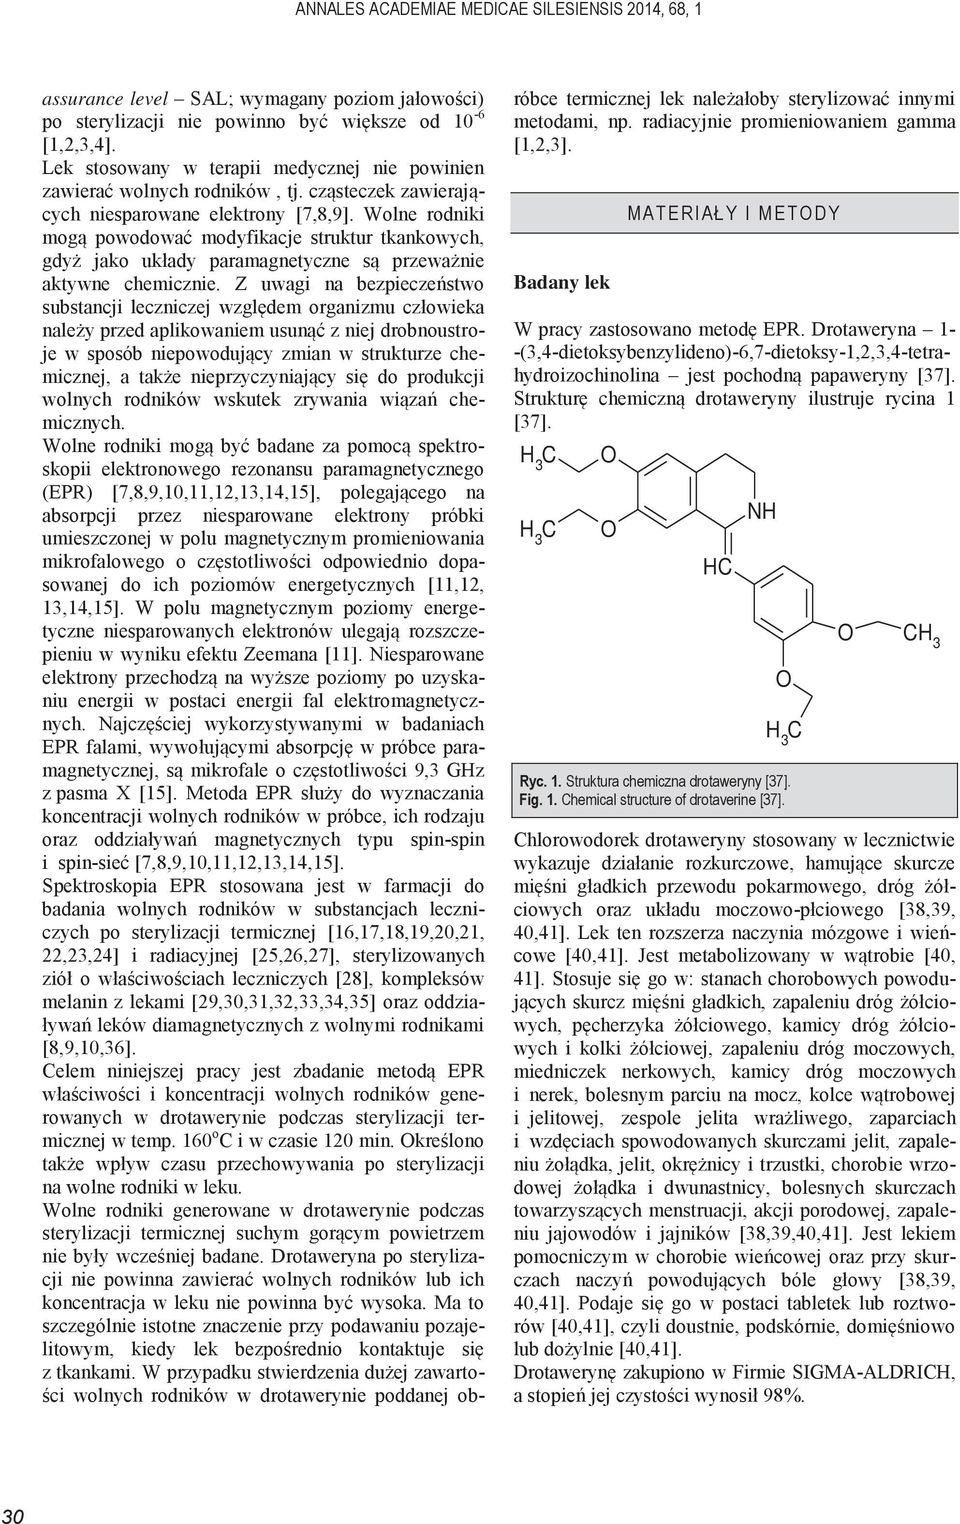 H 3 O HC NH Ryc. 1. Struktura chemiczna drotaweryny [37].